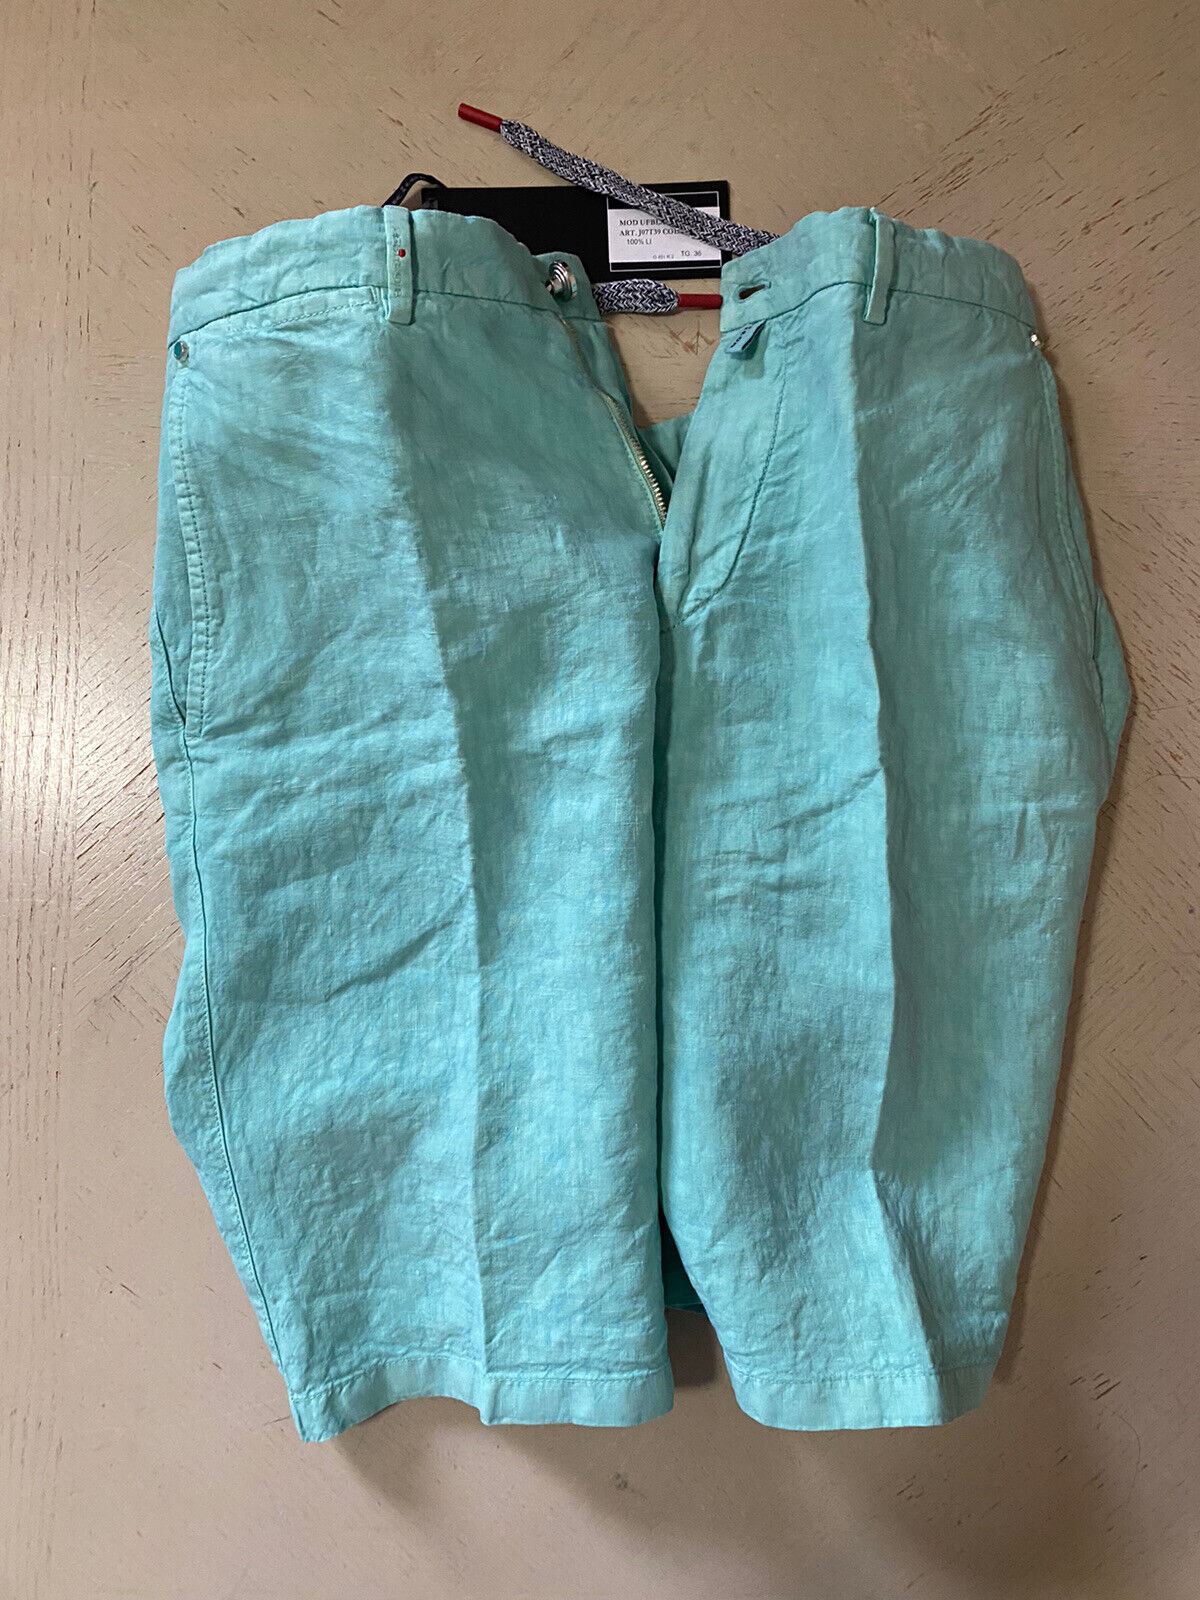 NWT $995 Kiton Mens Linen Short Pants Seafoam Green 36 US/ 52 Eu Italy